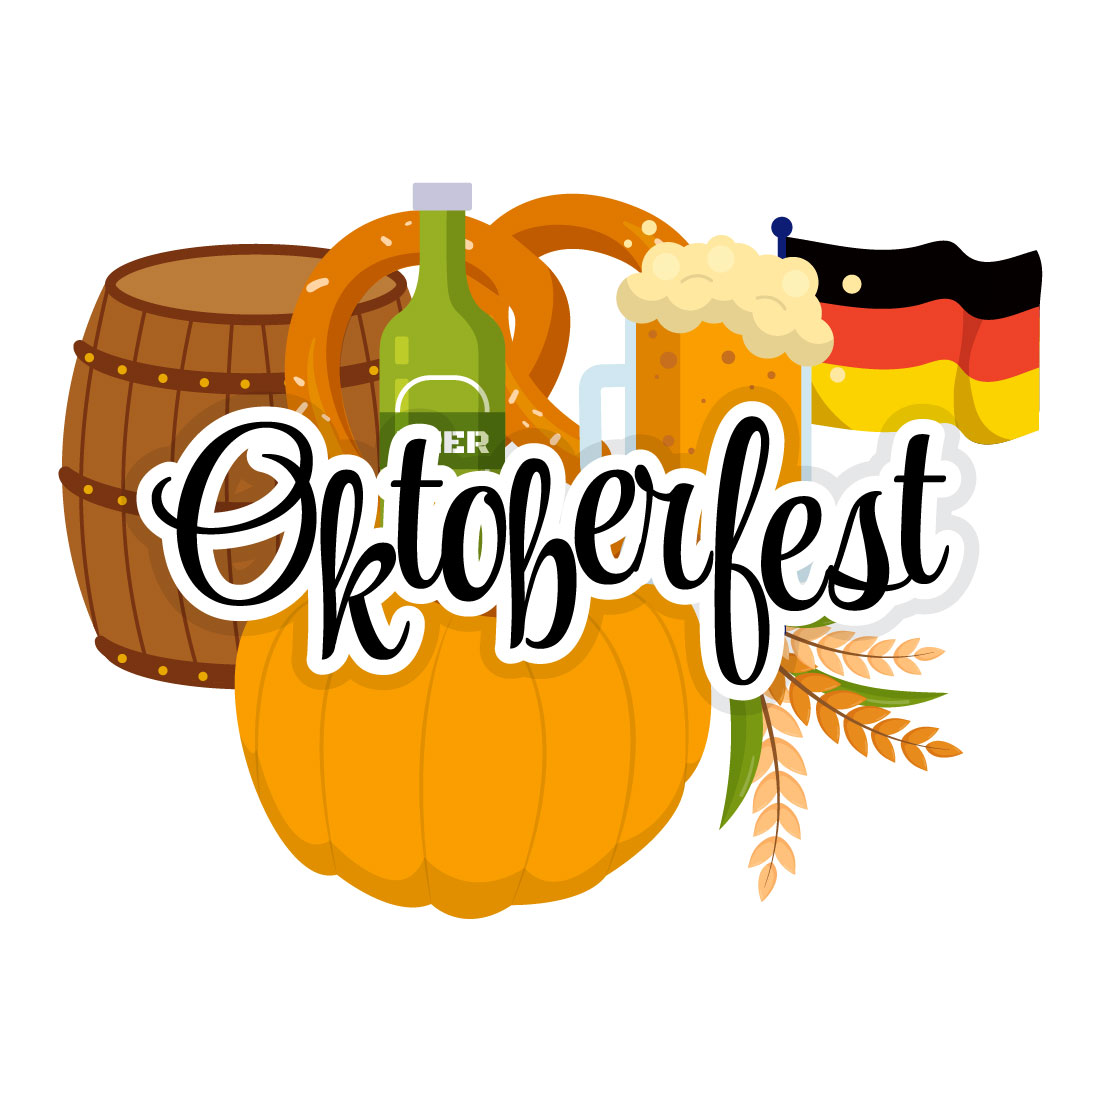 10 Happy Oktoberfest Beer Festival Elements Illustration cover image.